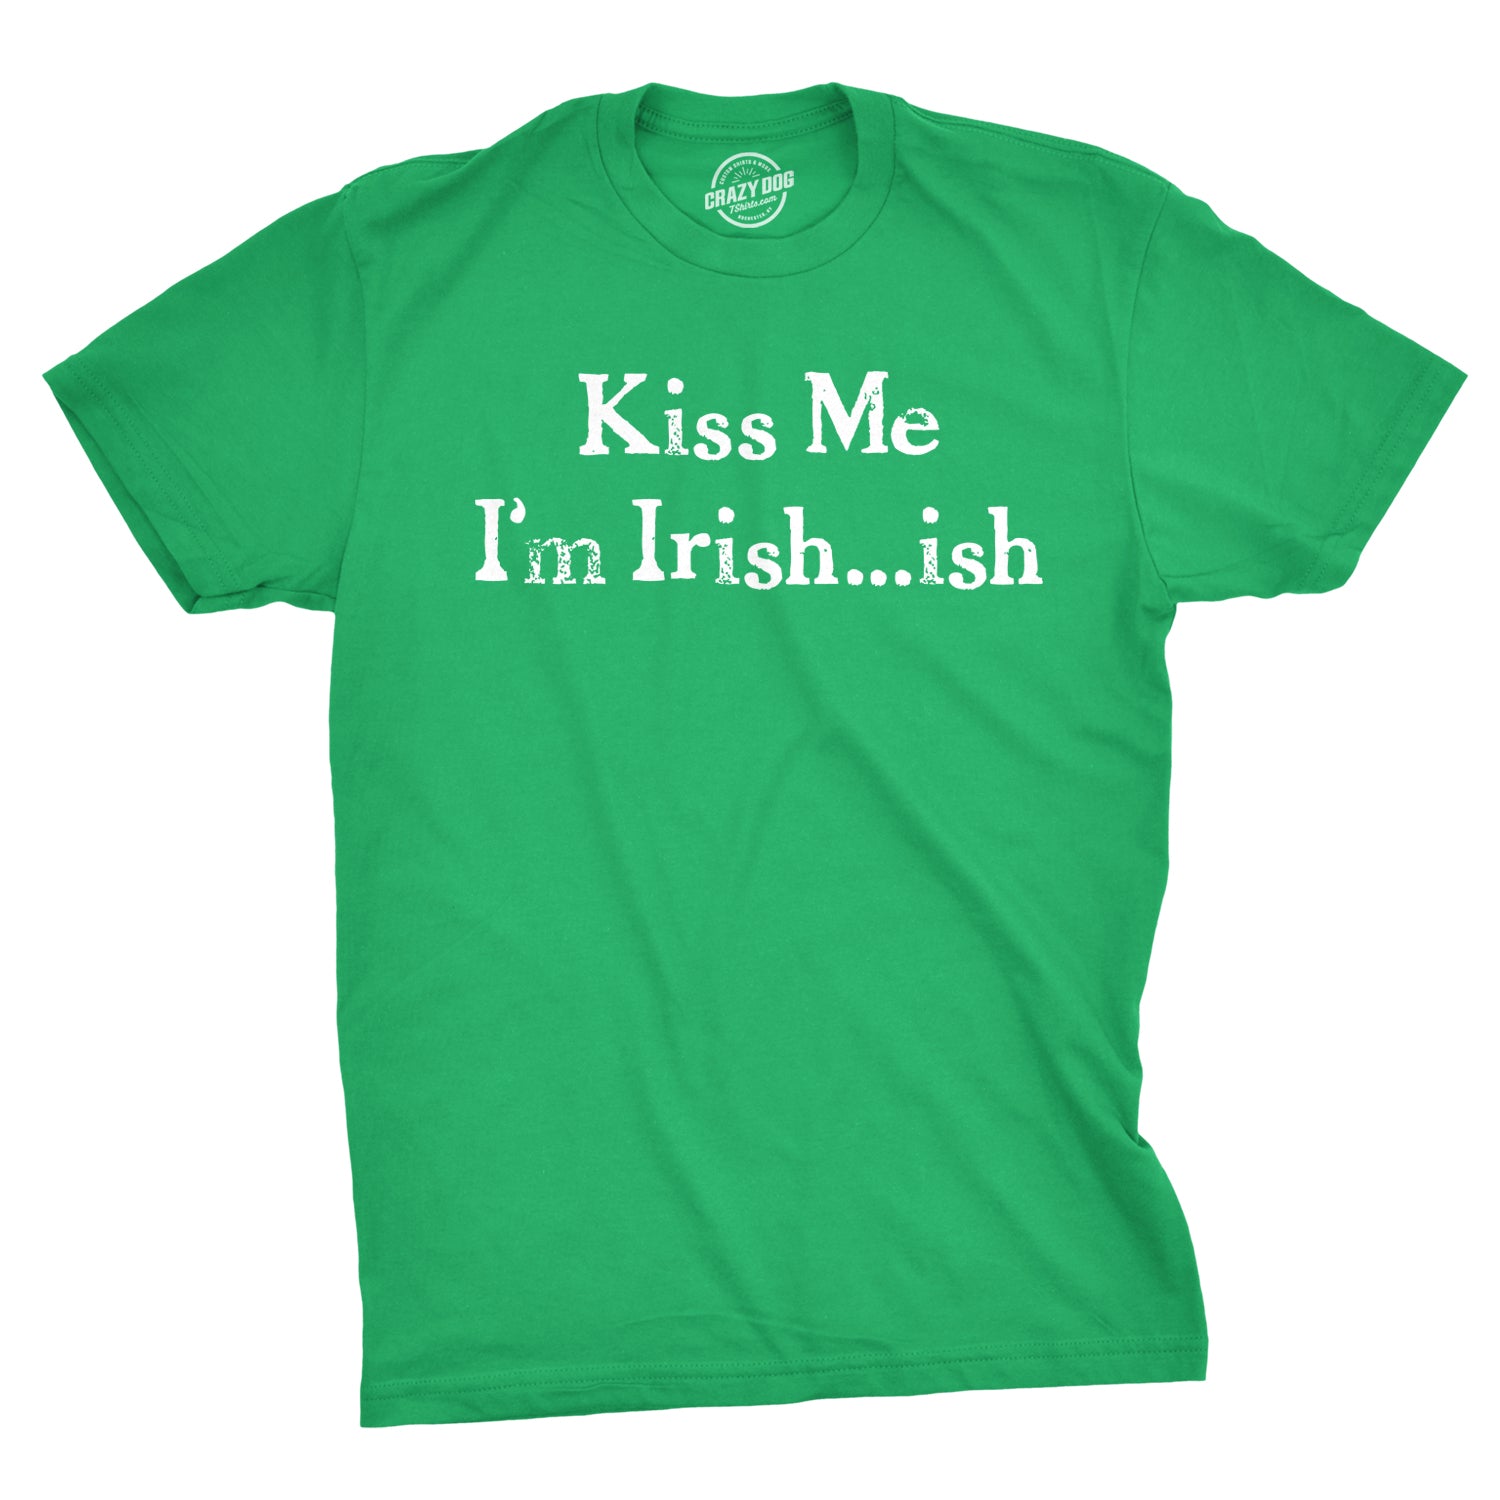 Funny Heather Green - Kiss Me Kiss Me I'm Irish-ish Mens T Shirt Nerdy Saint Patrick's Day Tee